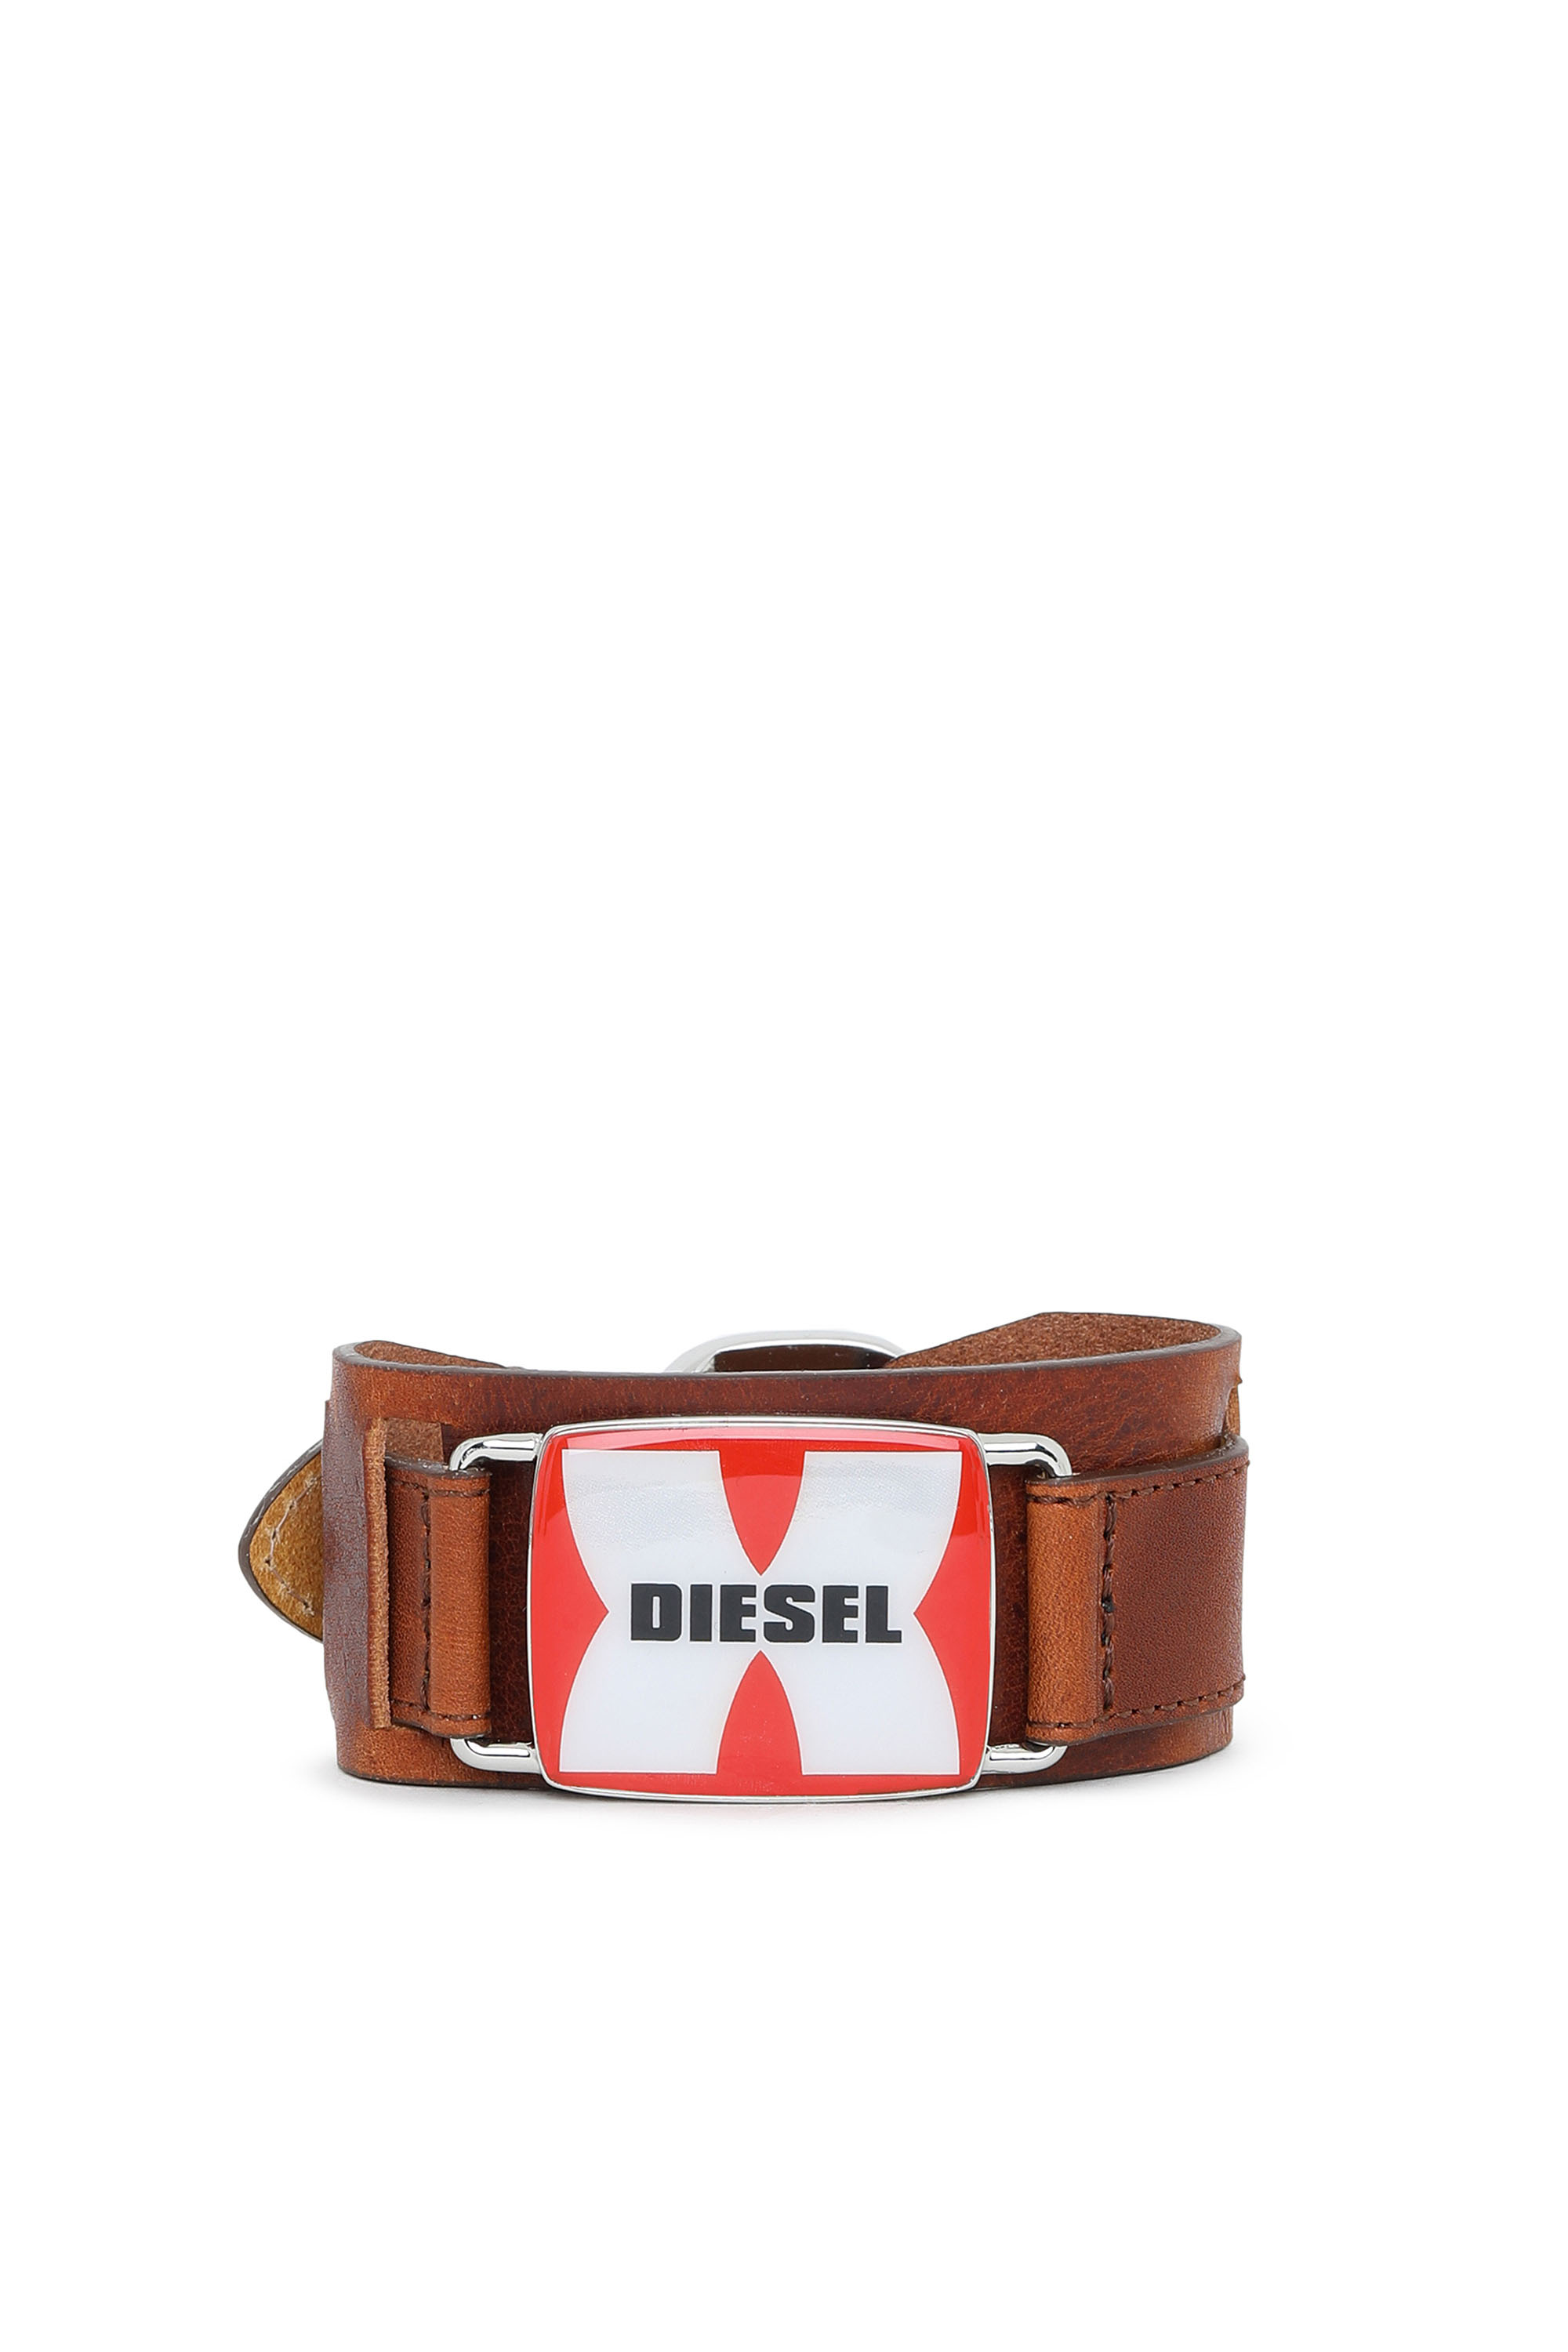 Diesel - A-PLAQUE, Brown - Image 1